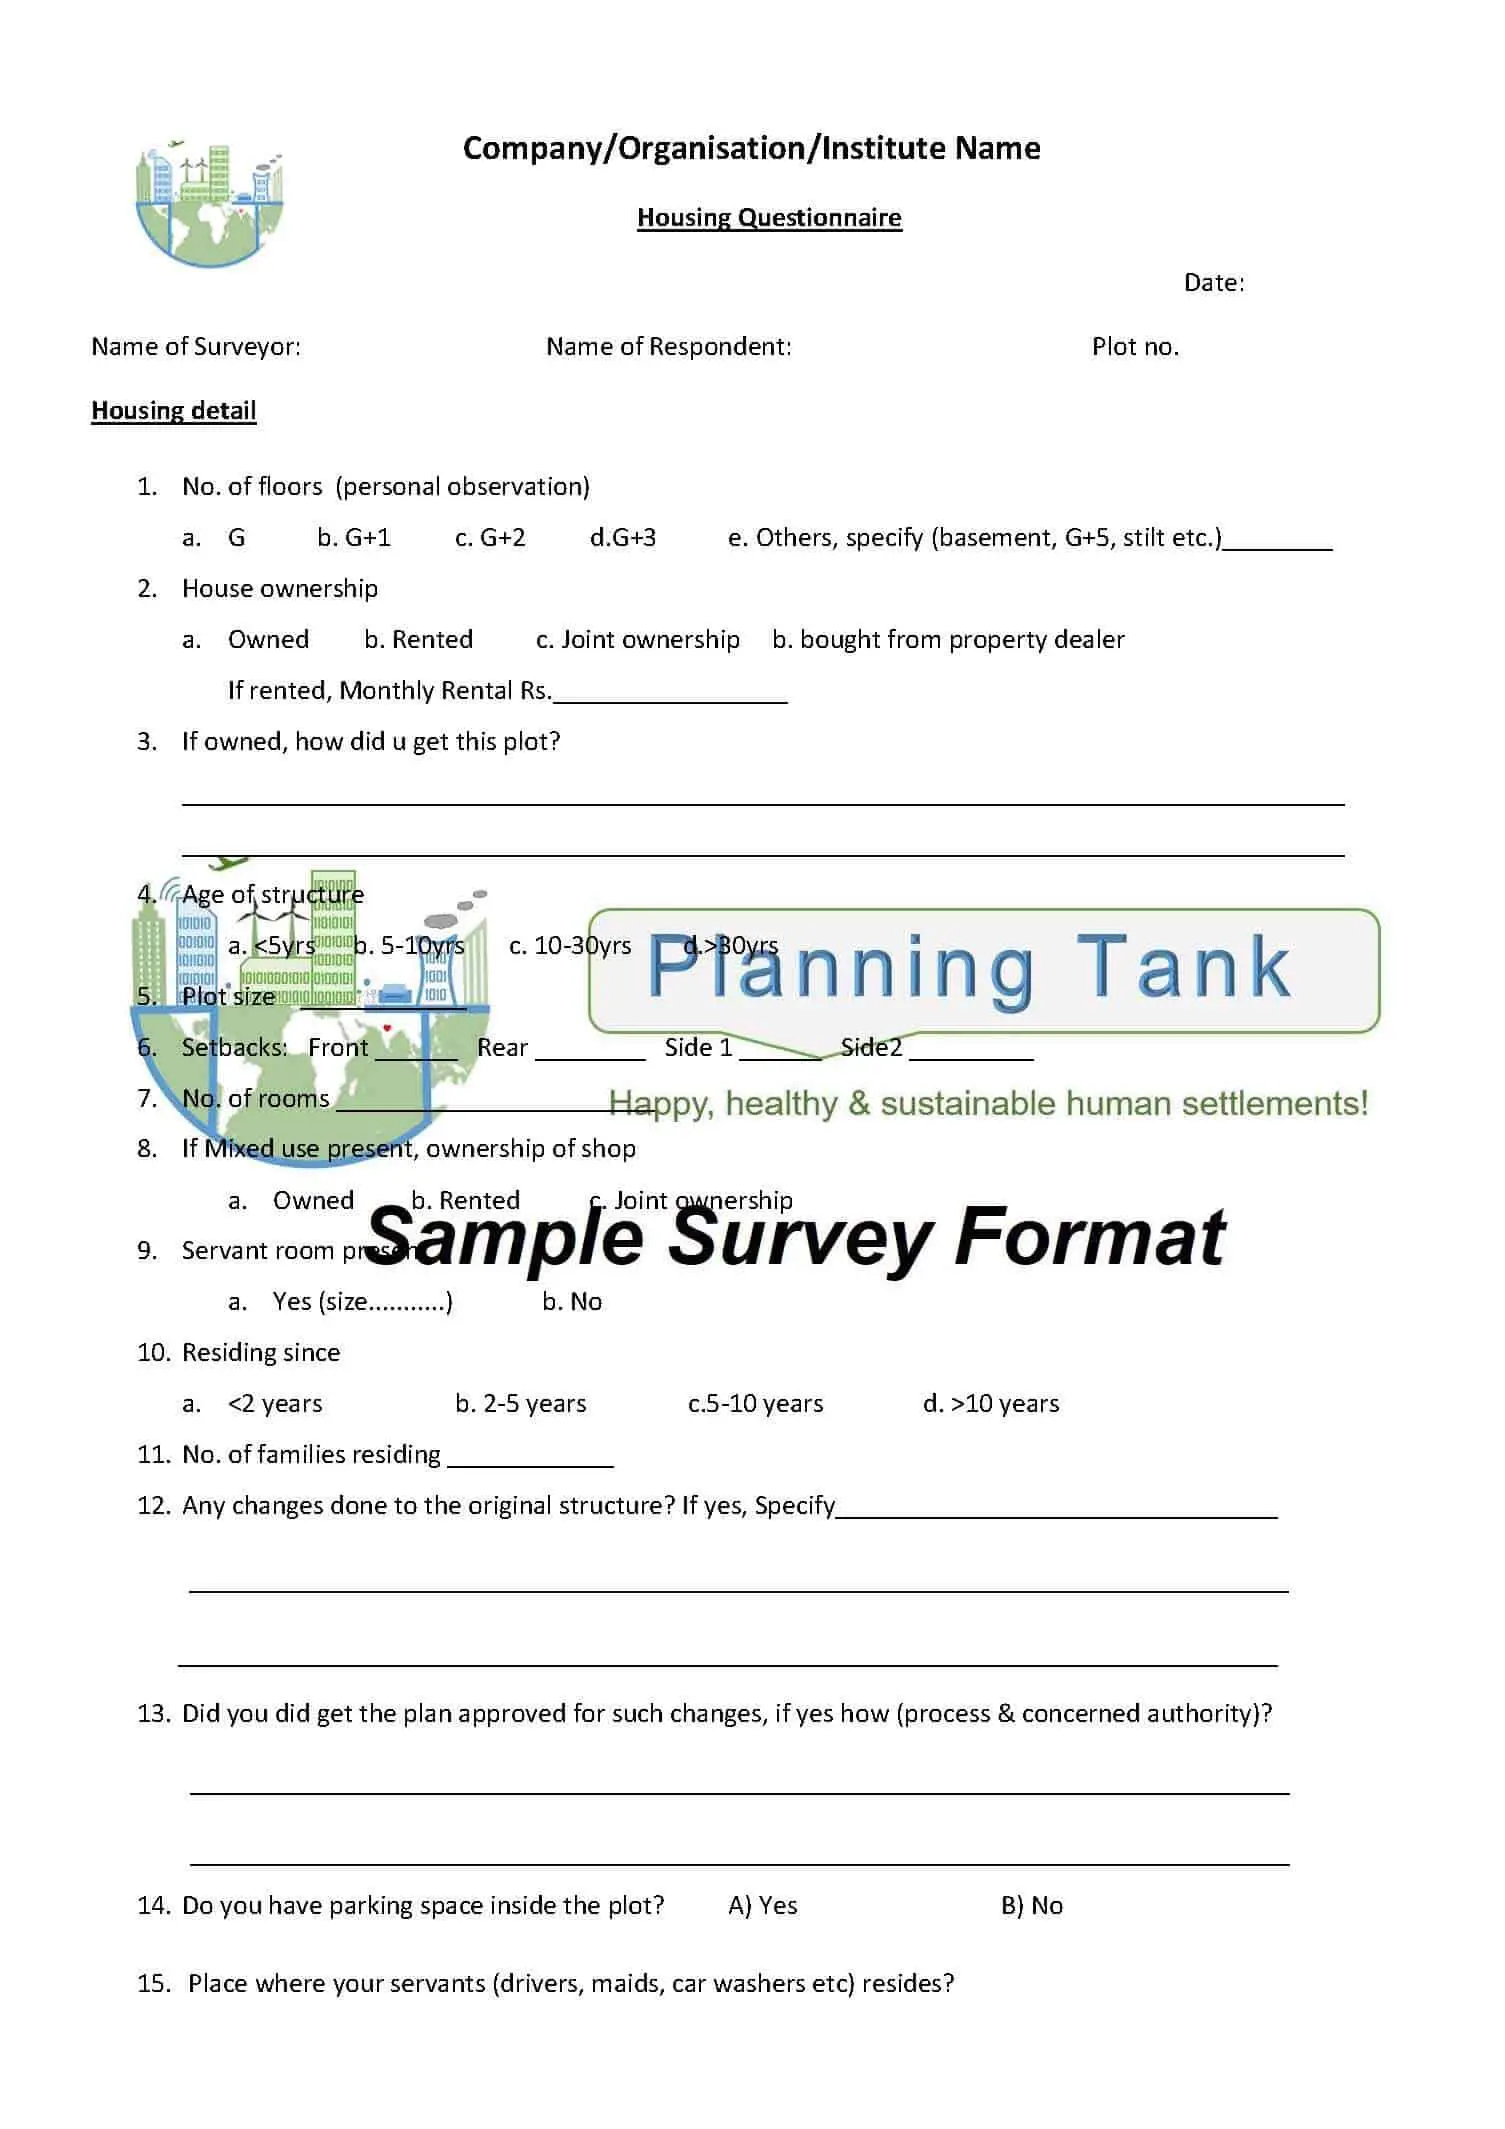 Household Survey Questionnaire (Editable) Sample 20  Planning Tank For Business Plan Questionnaire Template